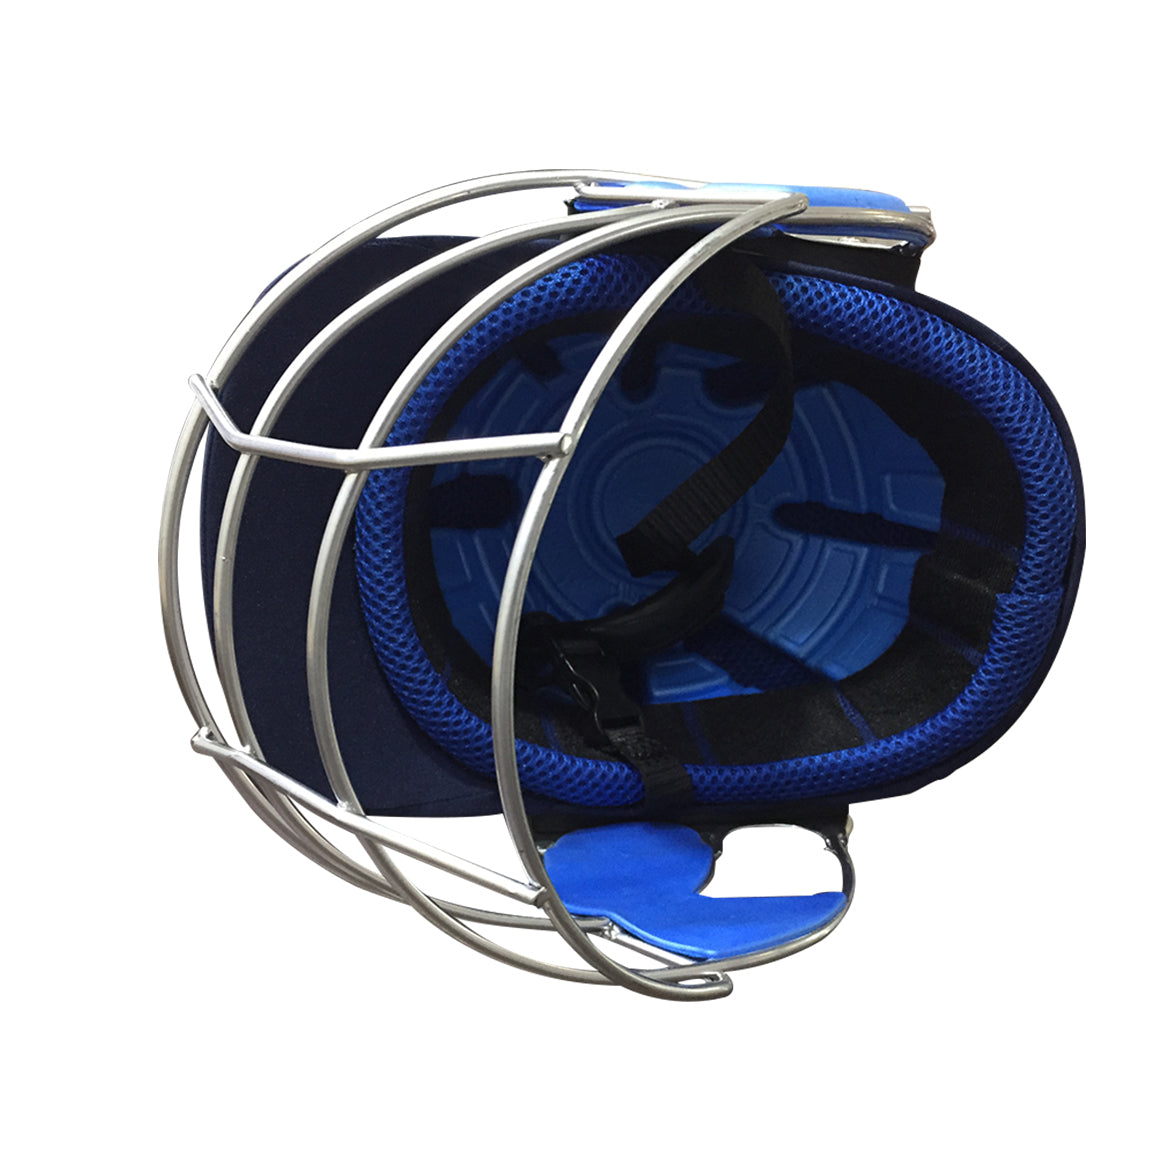 GA Step-One Cricket Helmet